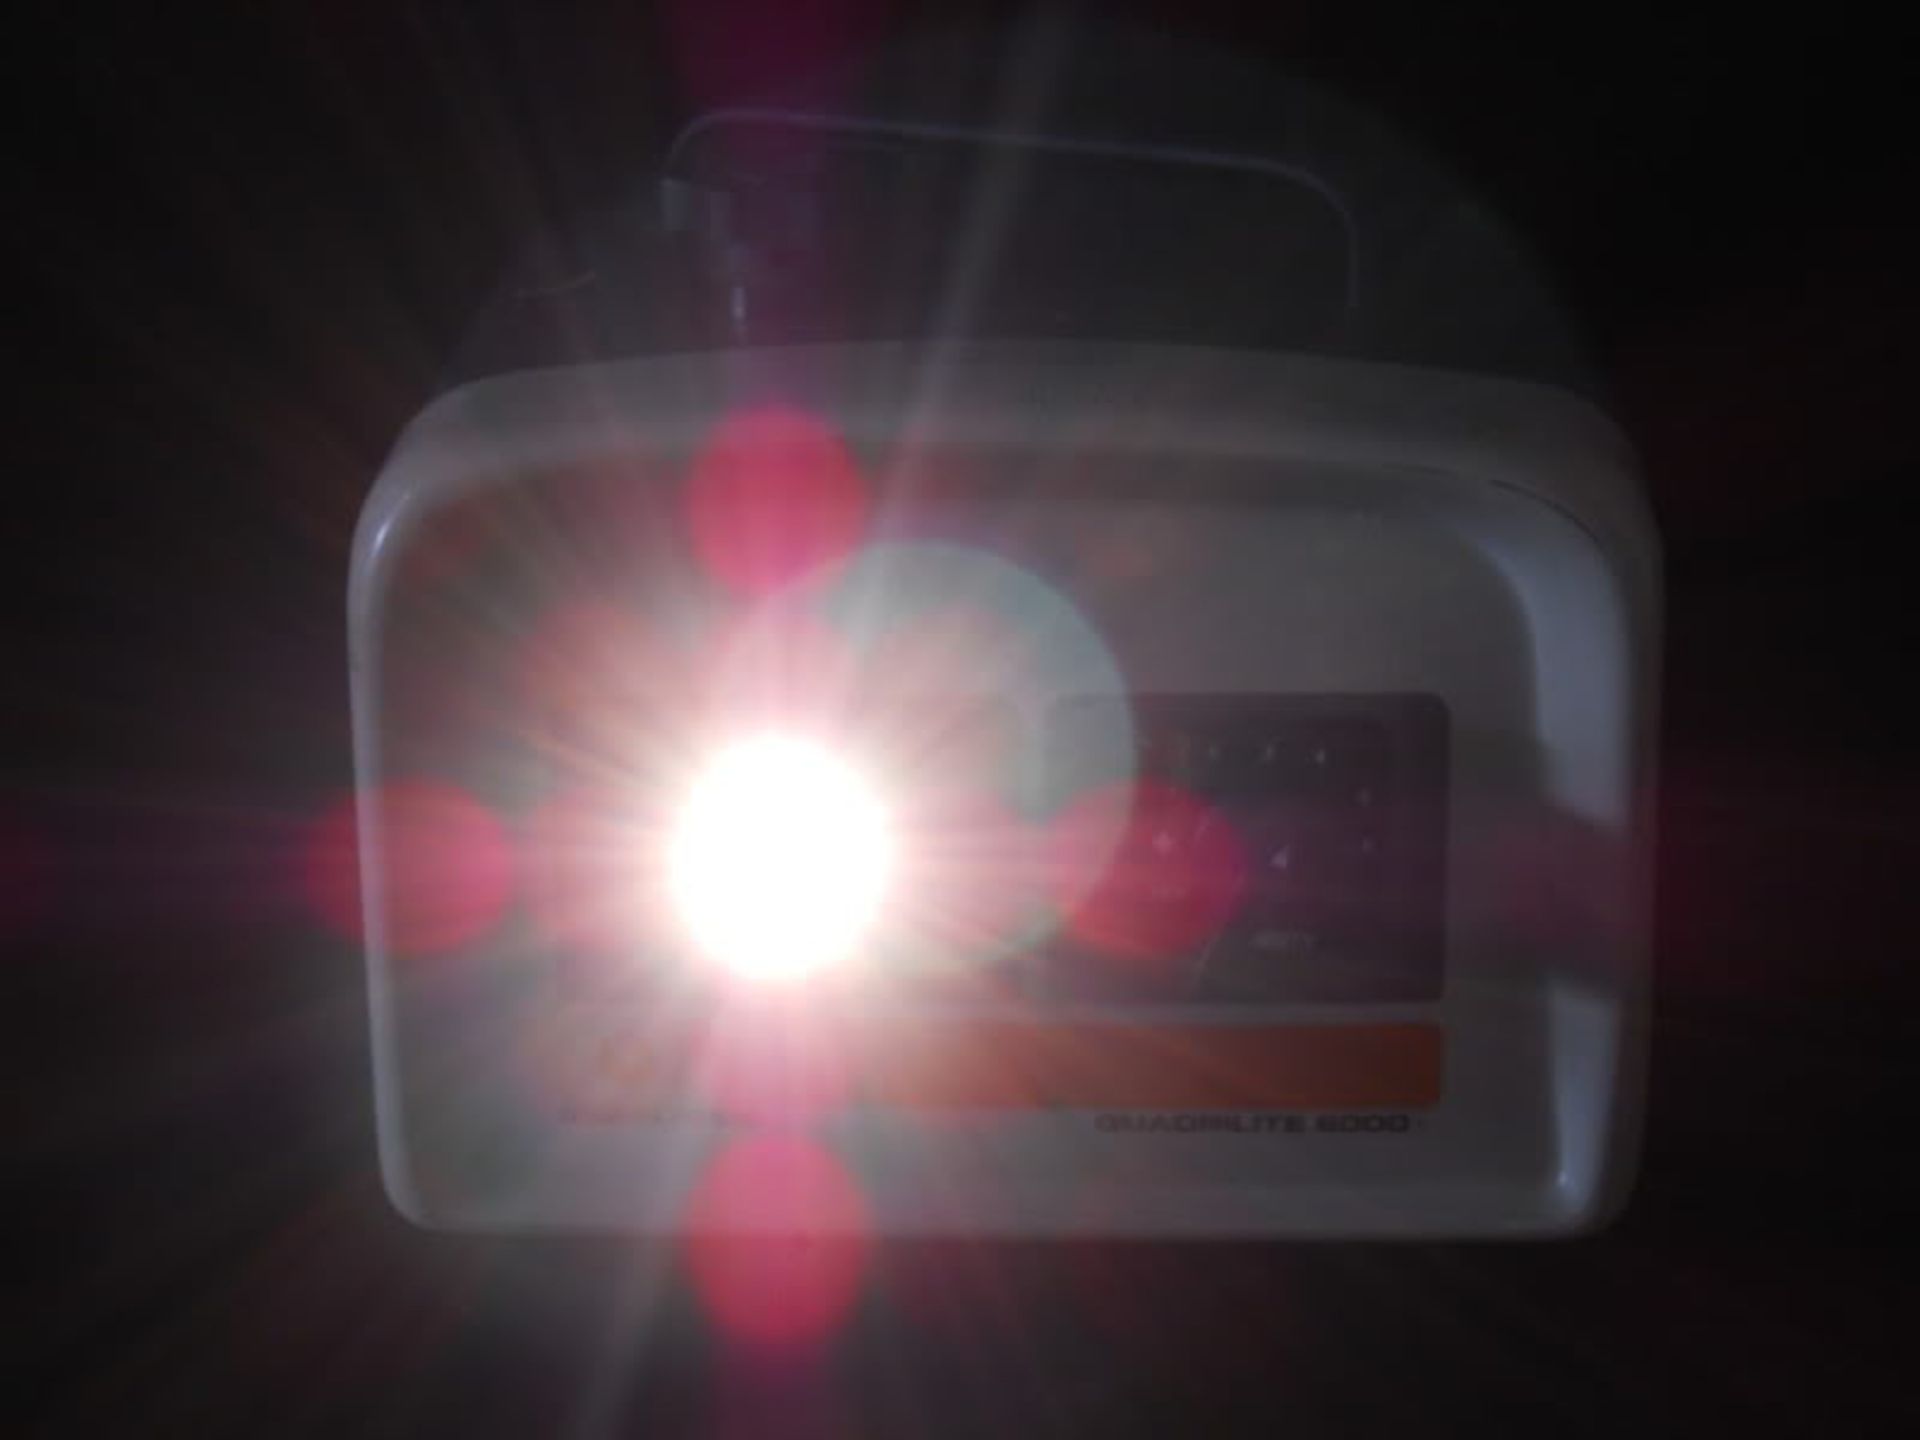 Quadrilite 6000 Universal Light Source w/ Headlight, Qty 1, 221019835175 - Image 6 of 10